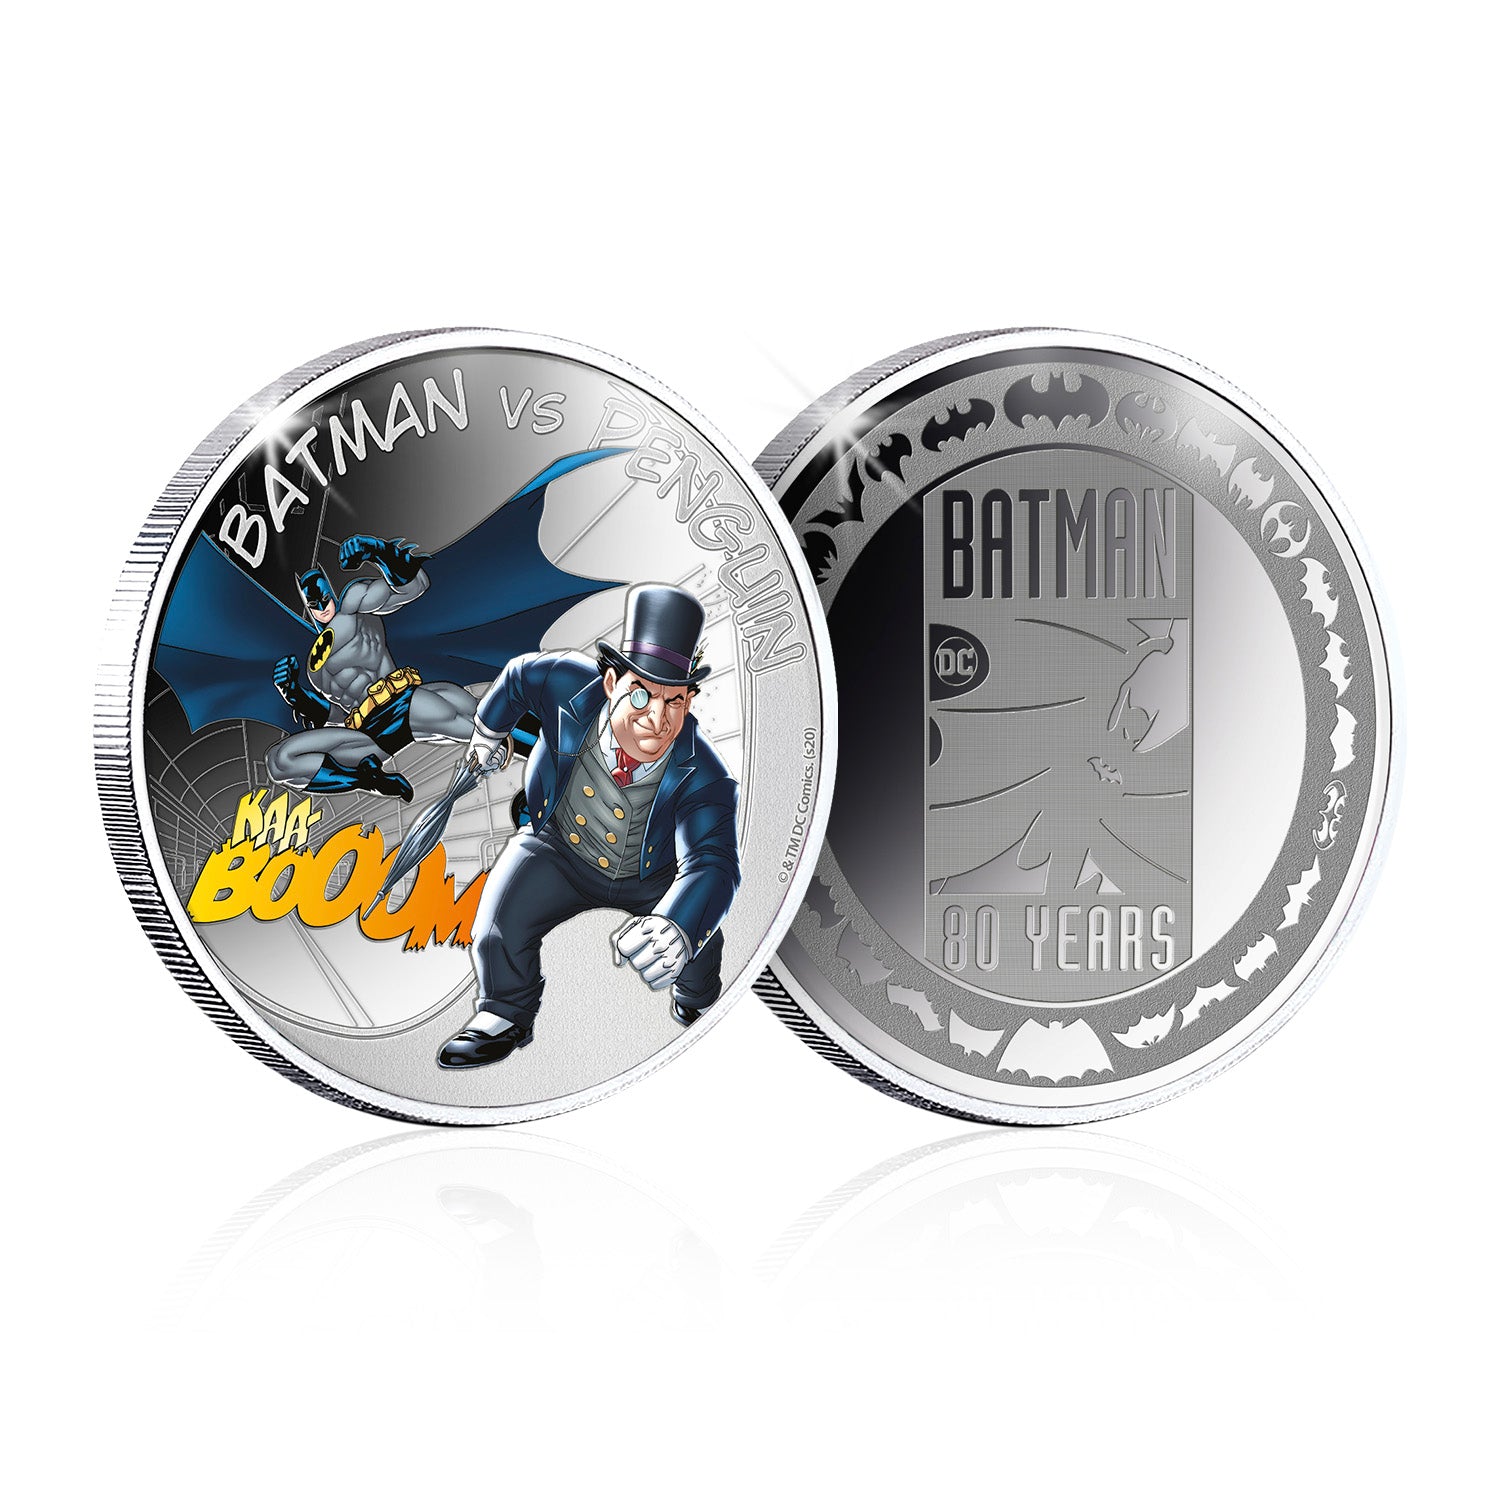 Batman vs Penguin Silver-Plated Commemorative